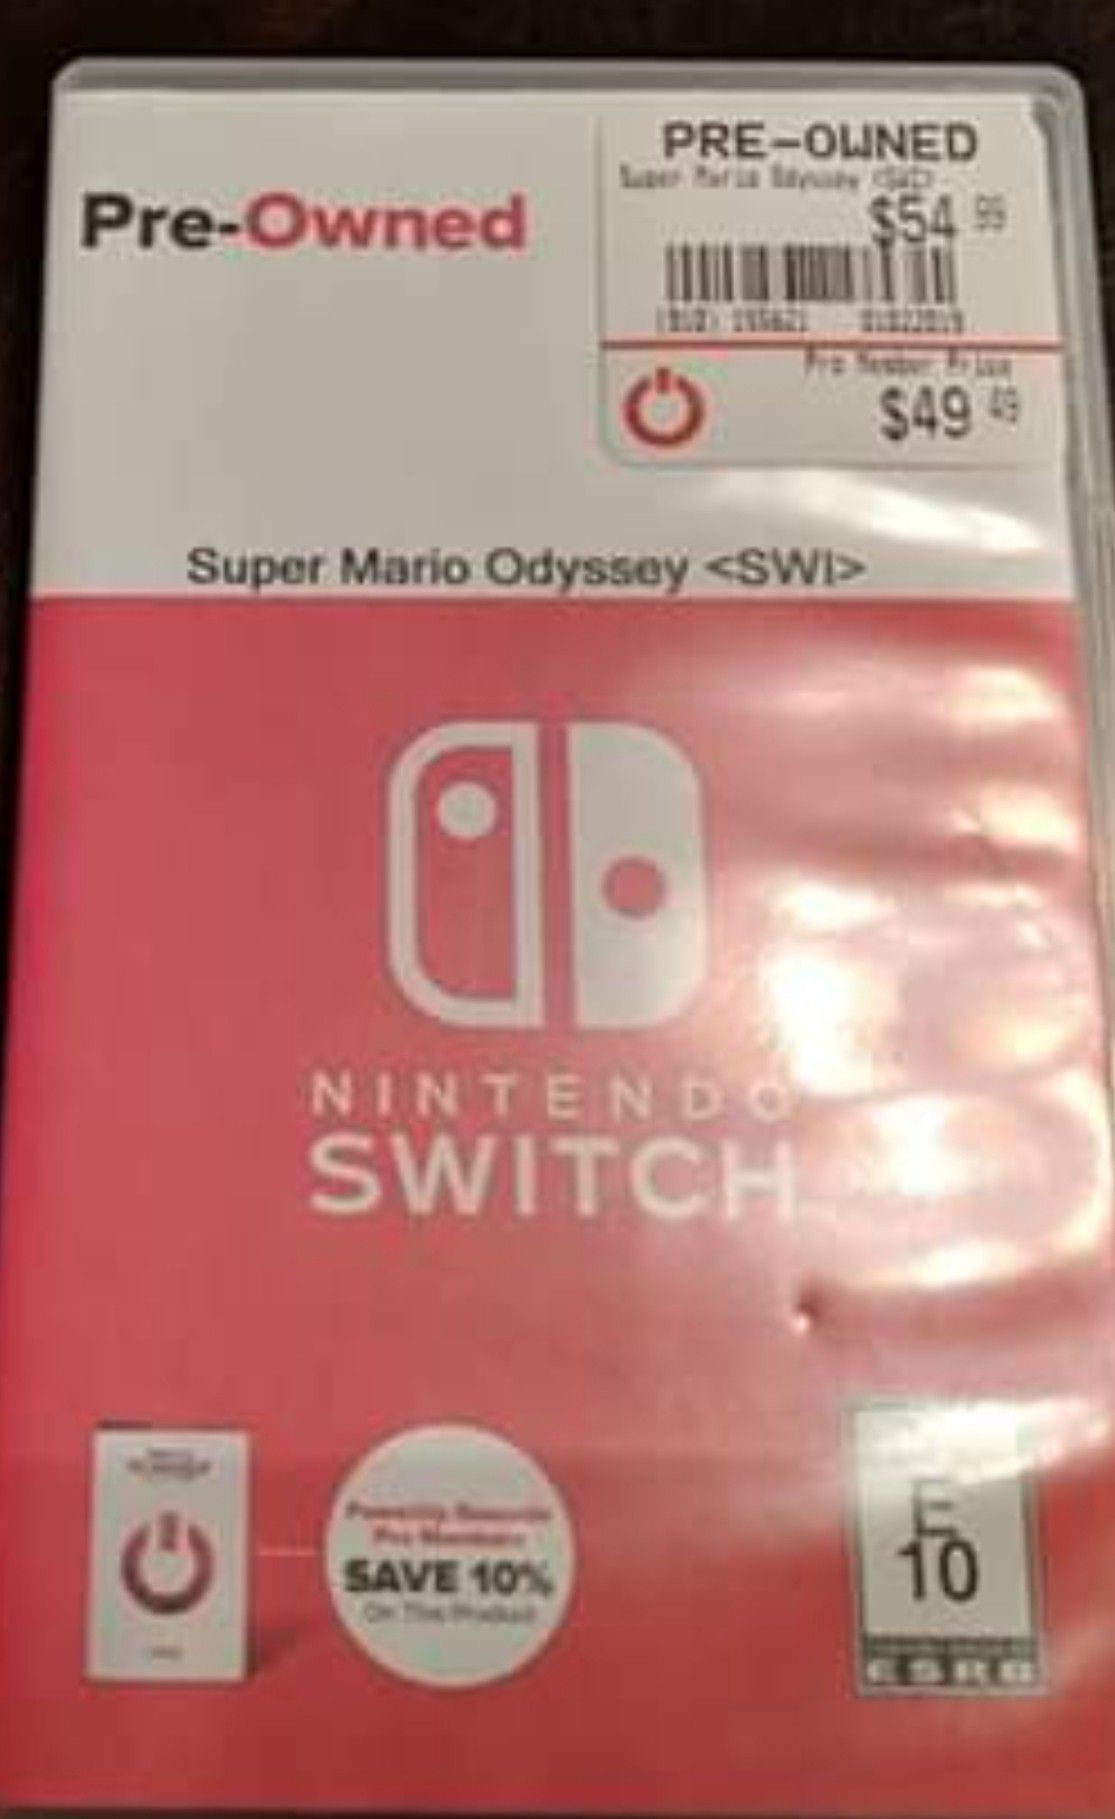 Super Mario Odyssey for Nintendo switch